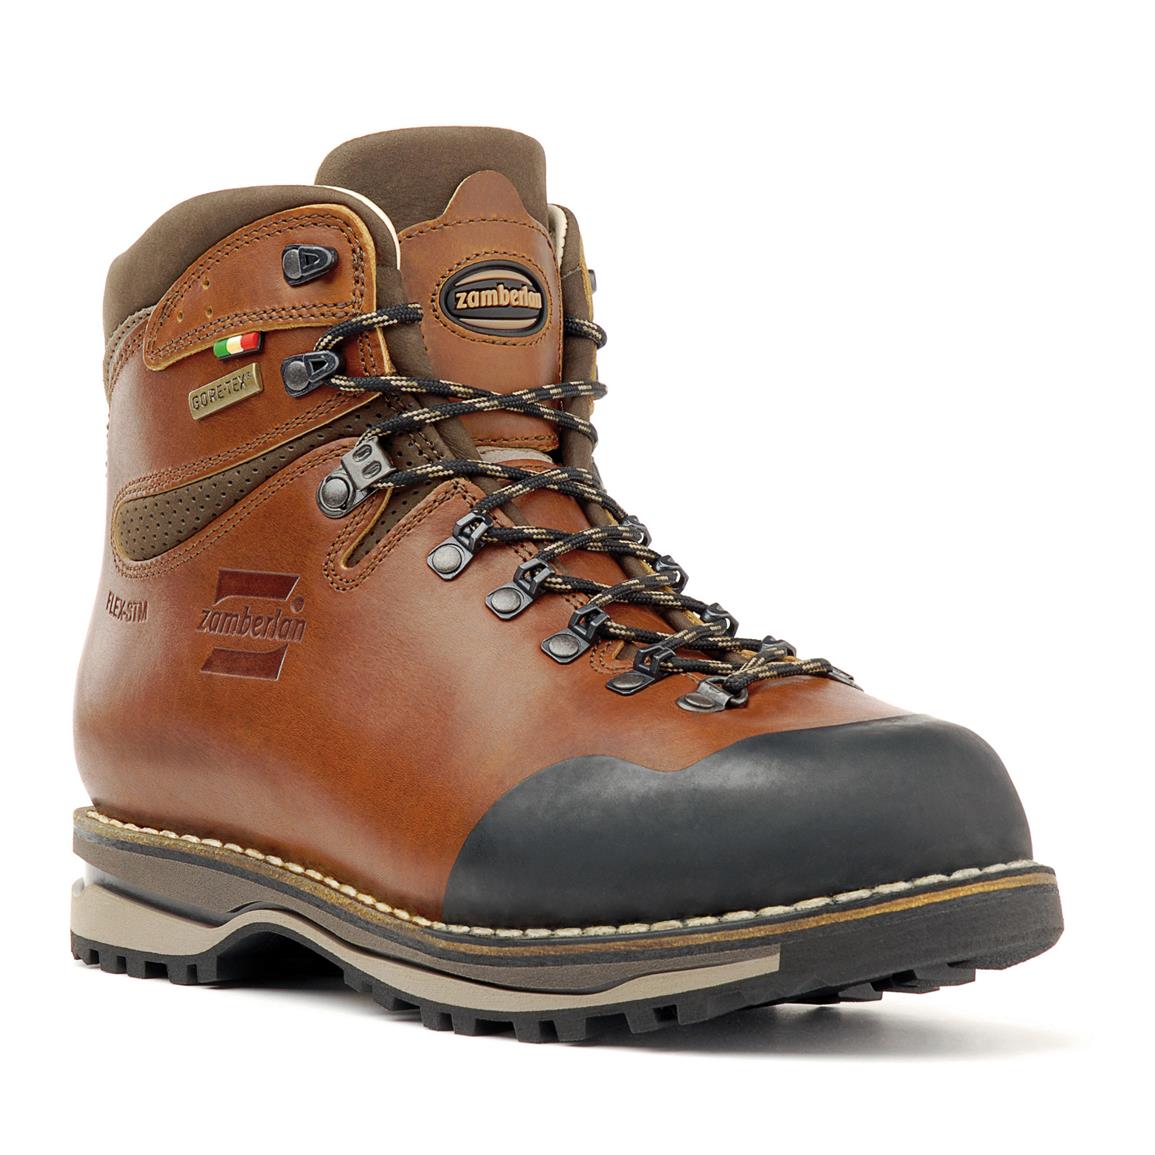 Zamberlan Tofane NW GTX RR Waterproof Hunting Boots - 655562, Hunting ...